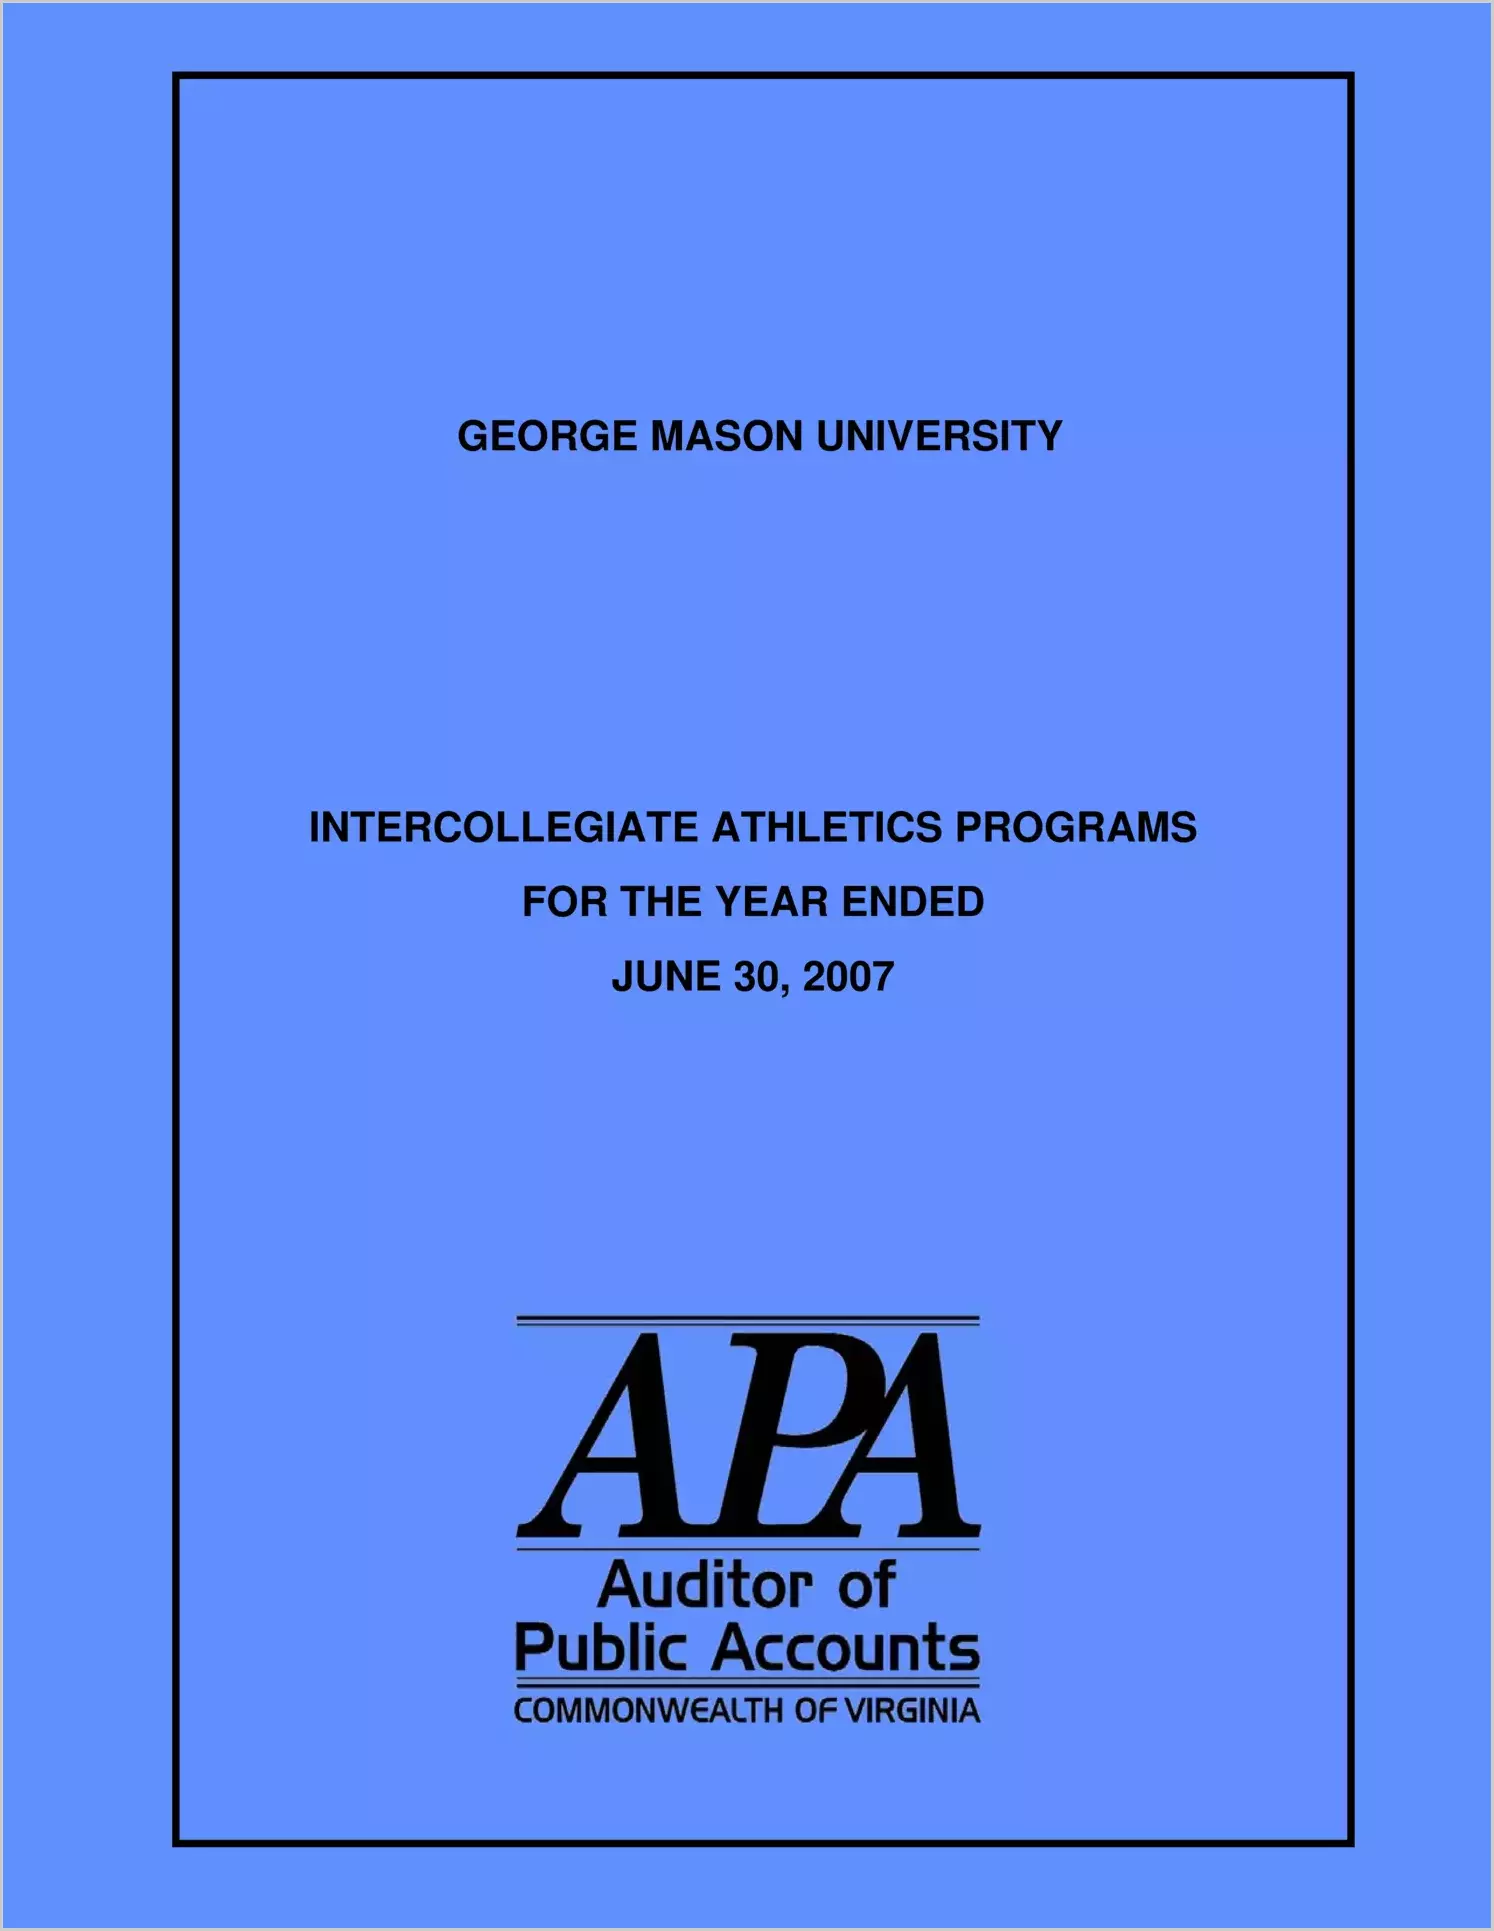 George Mason University Intercollegiate Athletics Programs for the year ended June 30, 2007